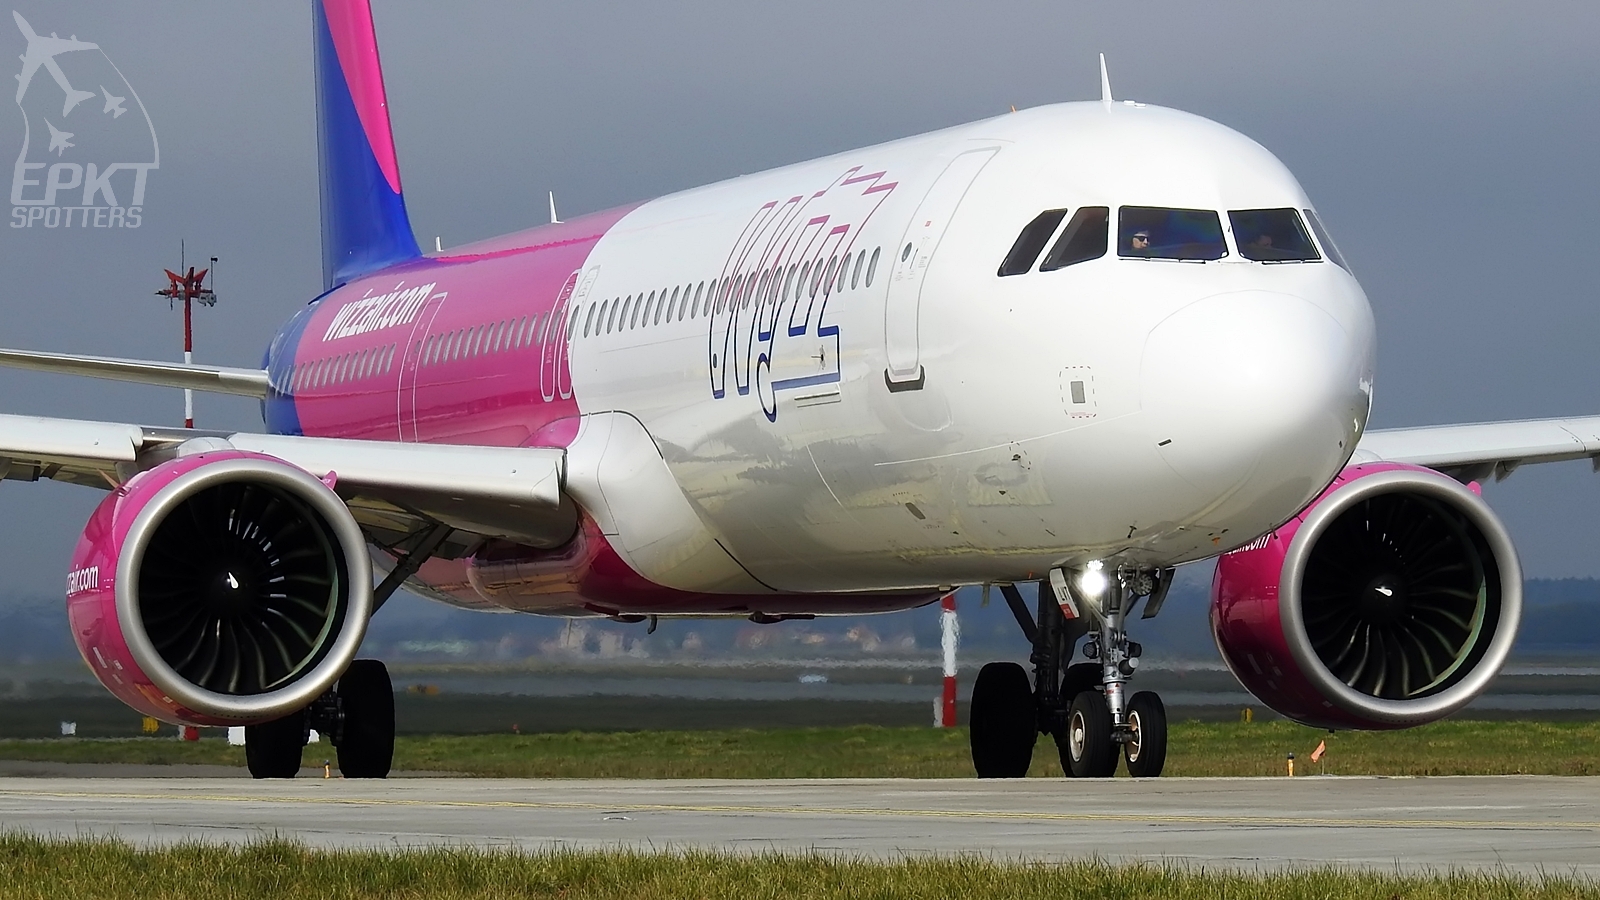 HA-LVT - Airbus A321 -271NX (Wizz Air) / Pyrzowice - Katowice Poland [EPKT/KTW]